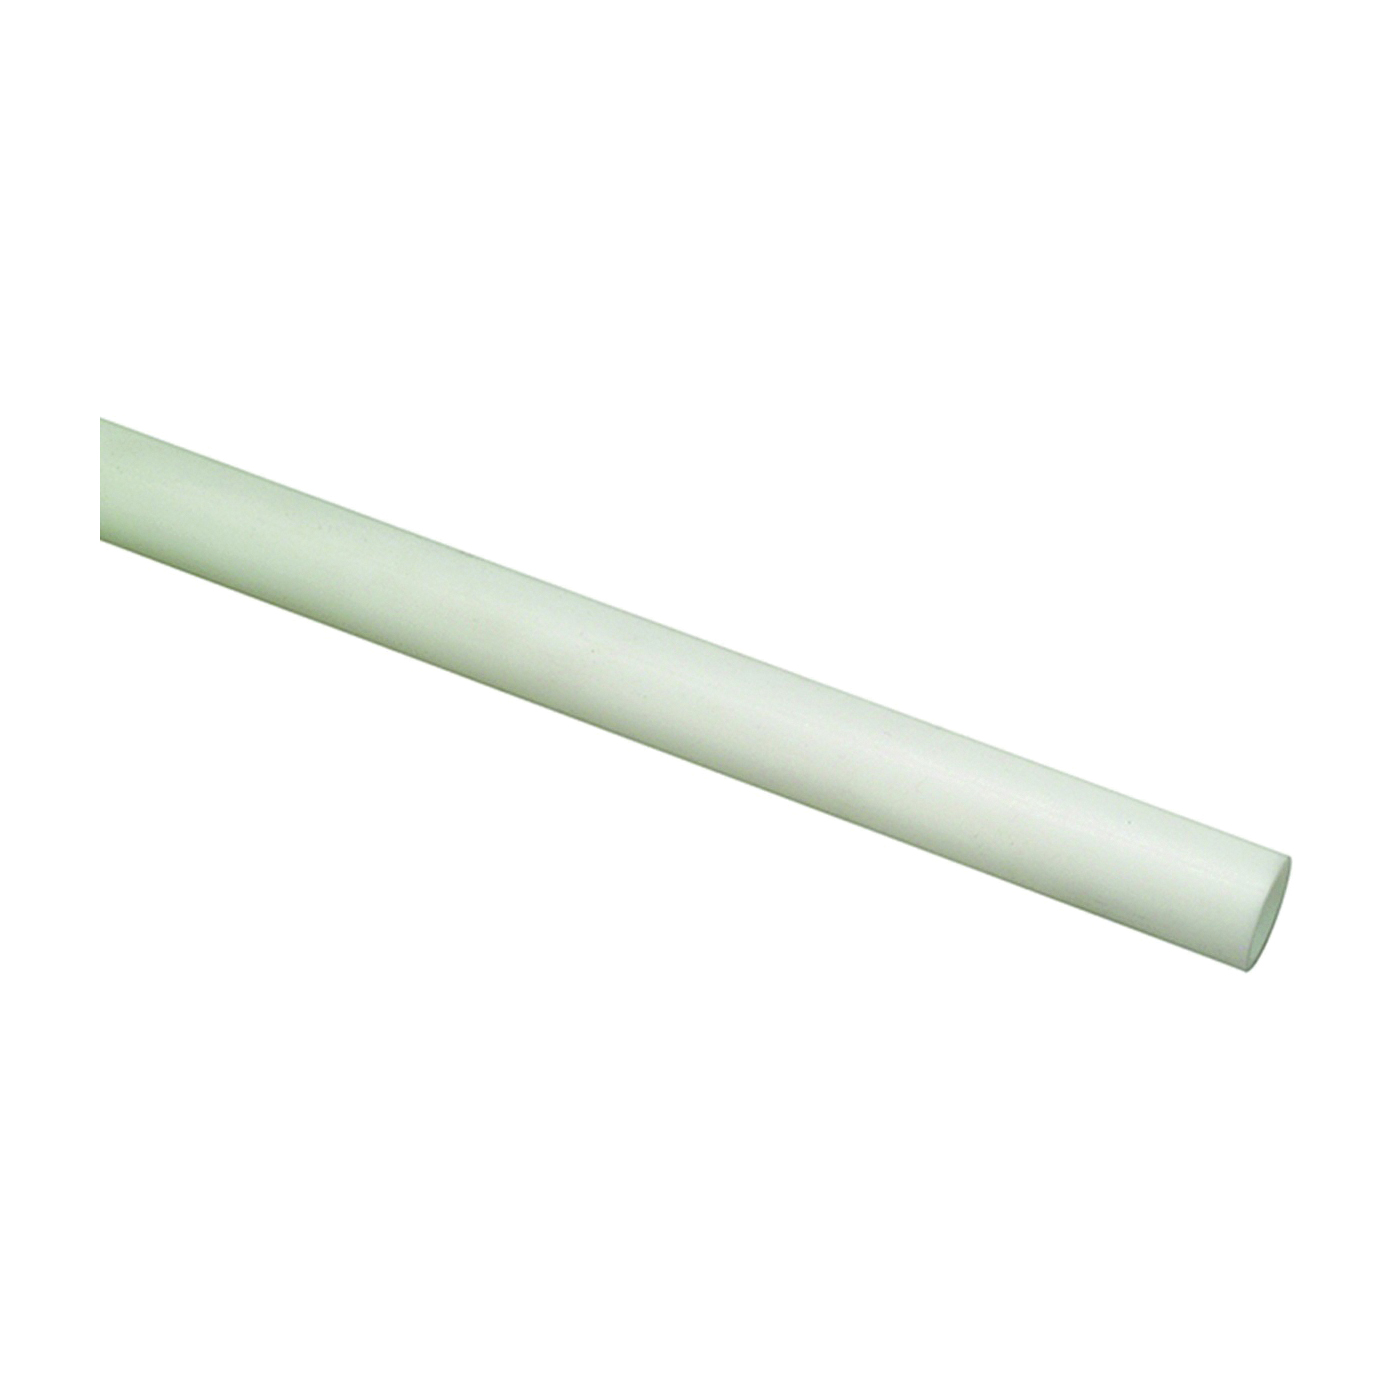 APPW1012 PEX-B Pipe Tubing, 1/2 in, White, 10 ft L